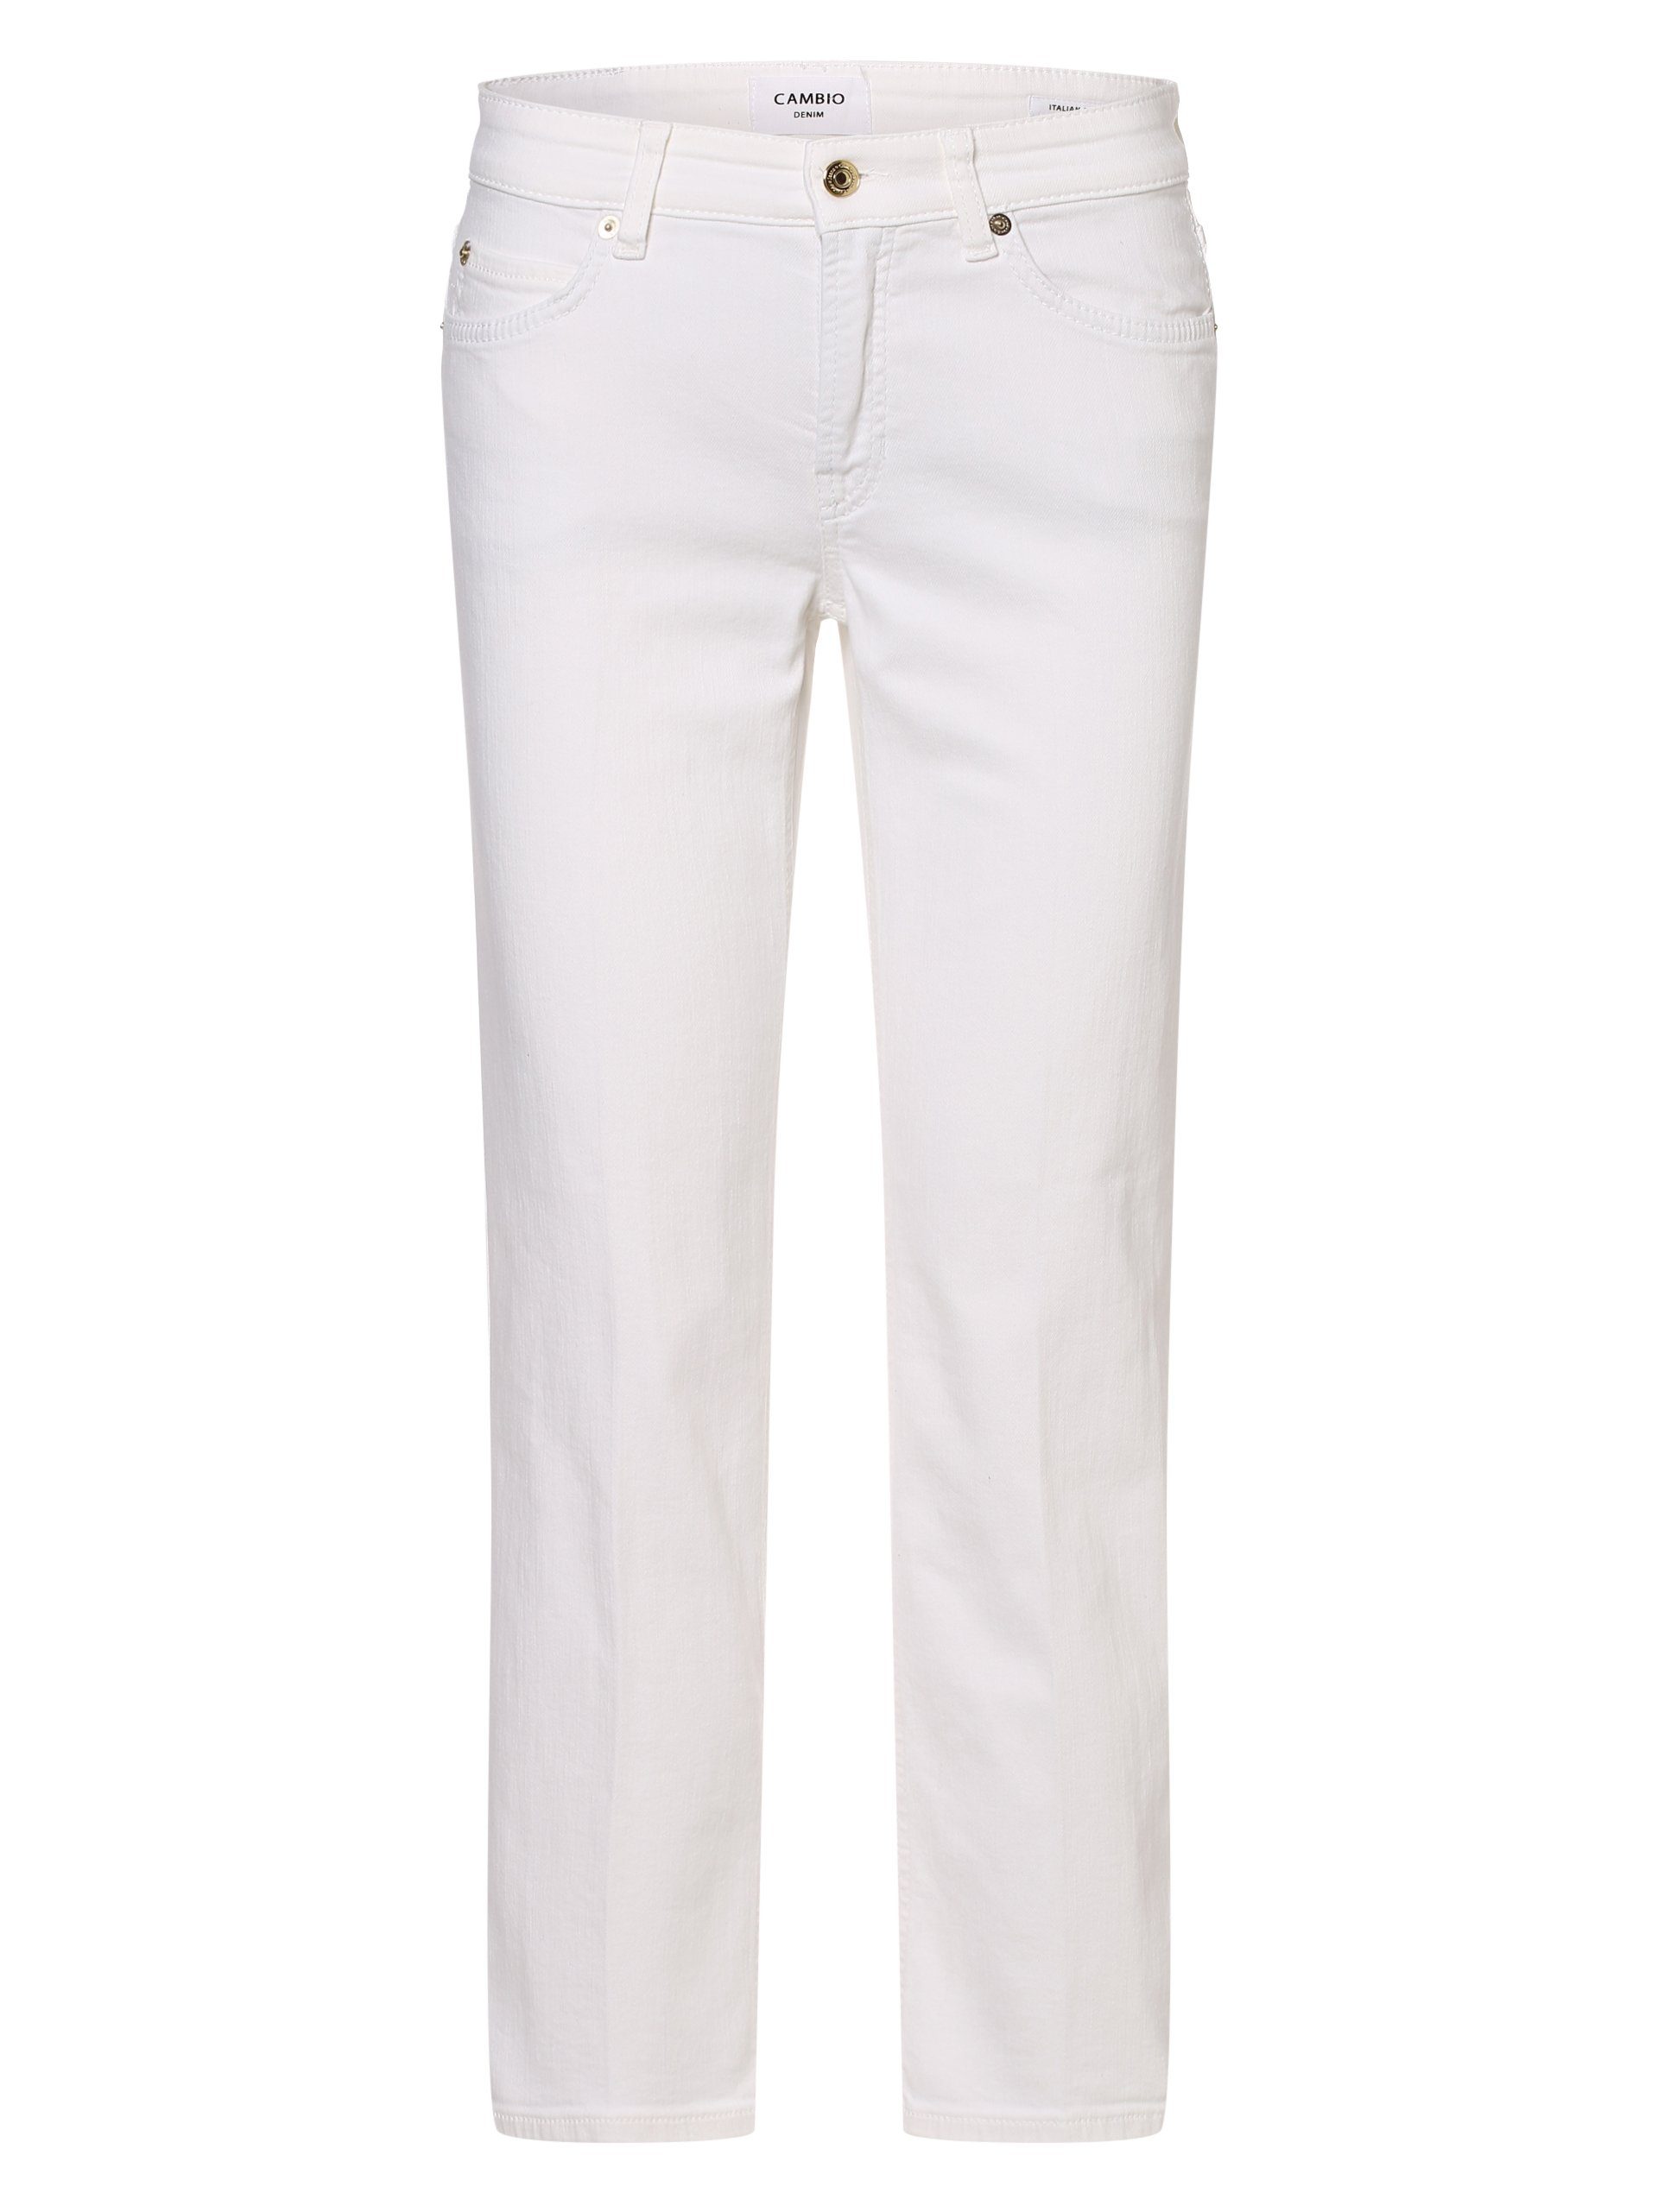 Cambio 5-Pocket-Hose Paris | Straight-Fit Jeans